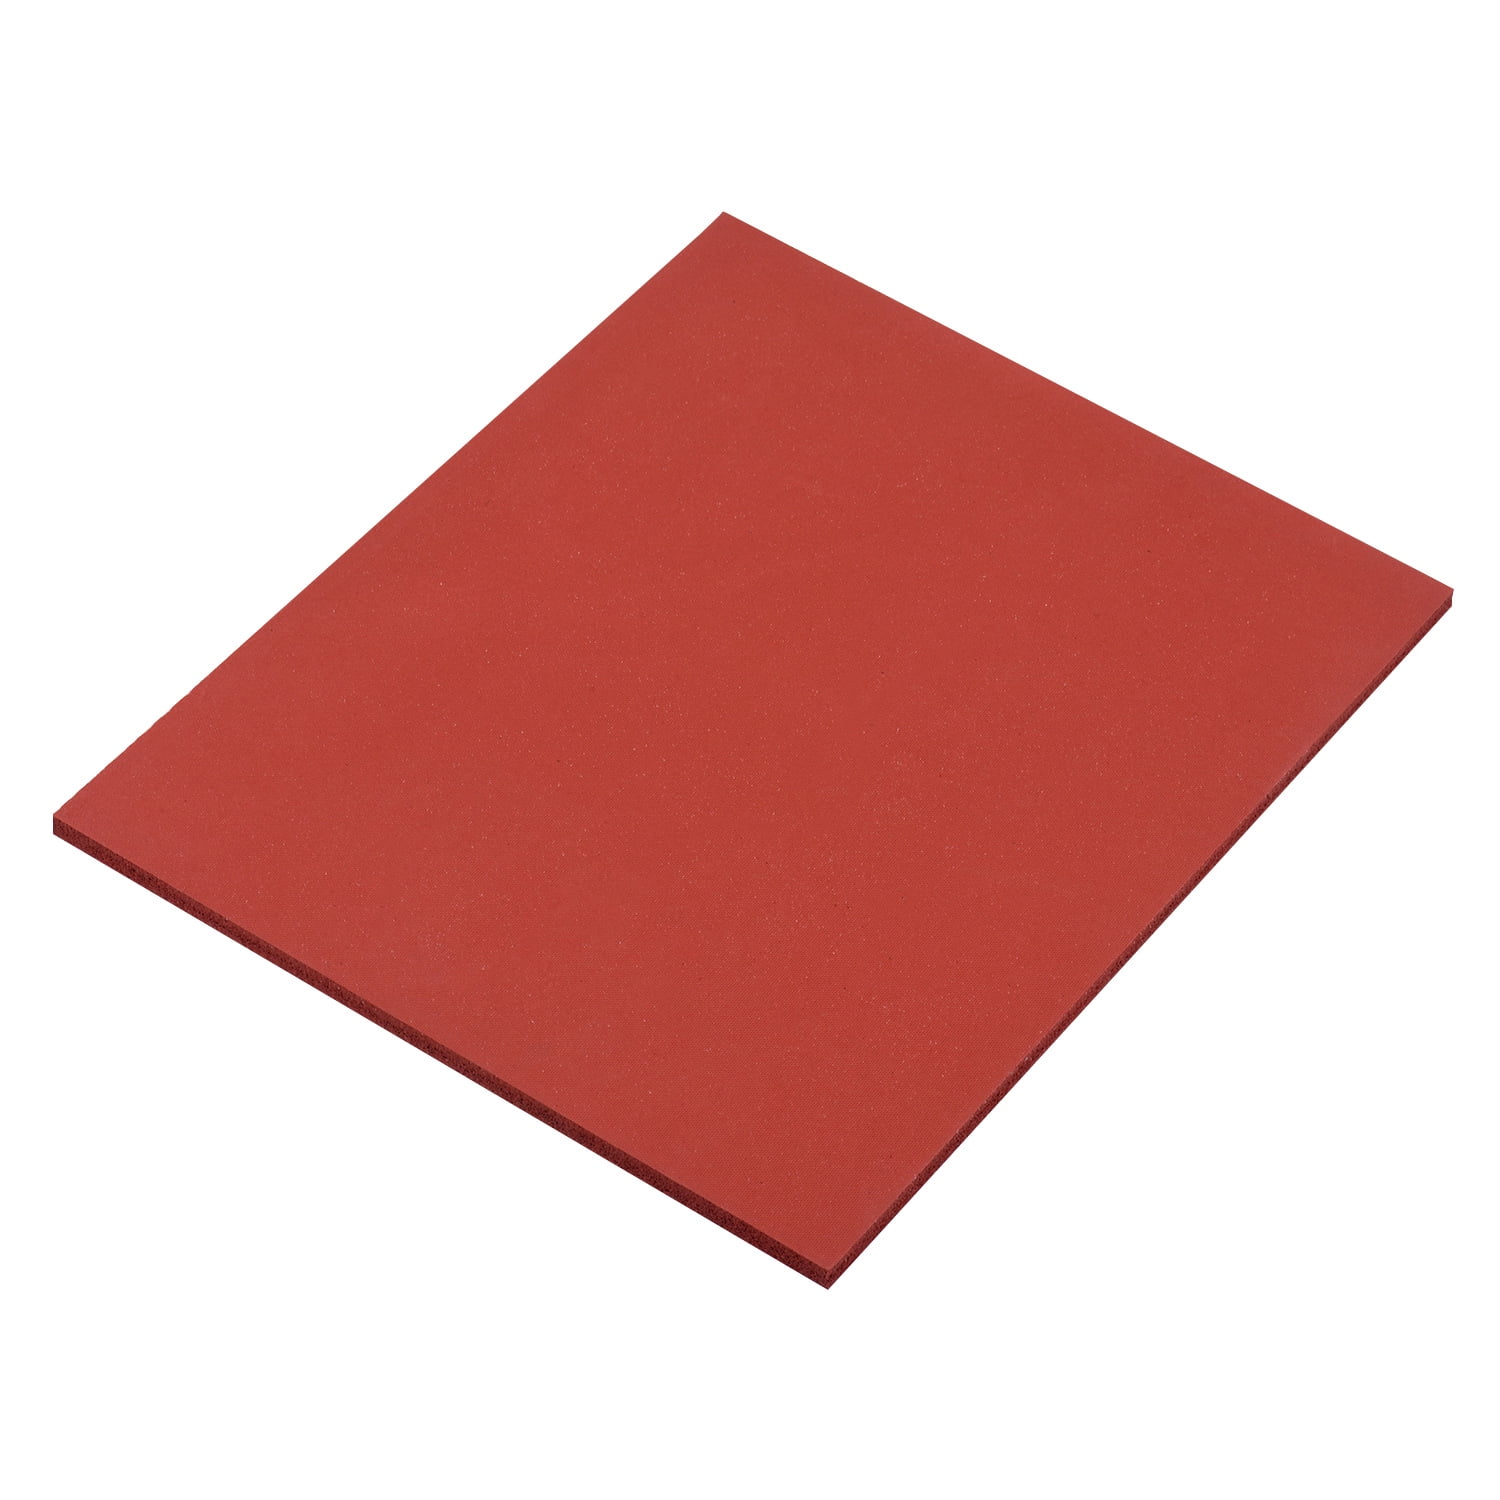  16x24 High Temp Silicone Rubber Pad for Flat Heat Press  Machine Silicone Pad : Industrial & Scientific